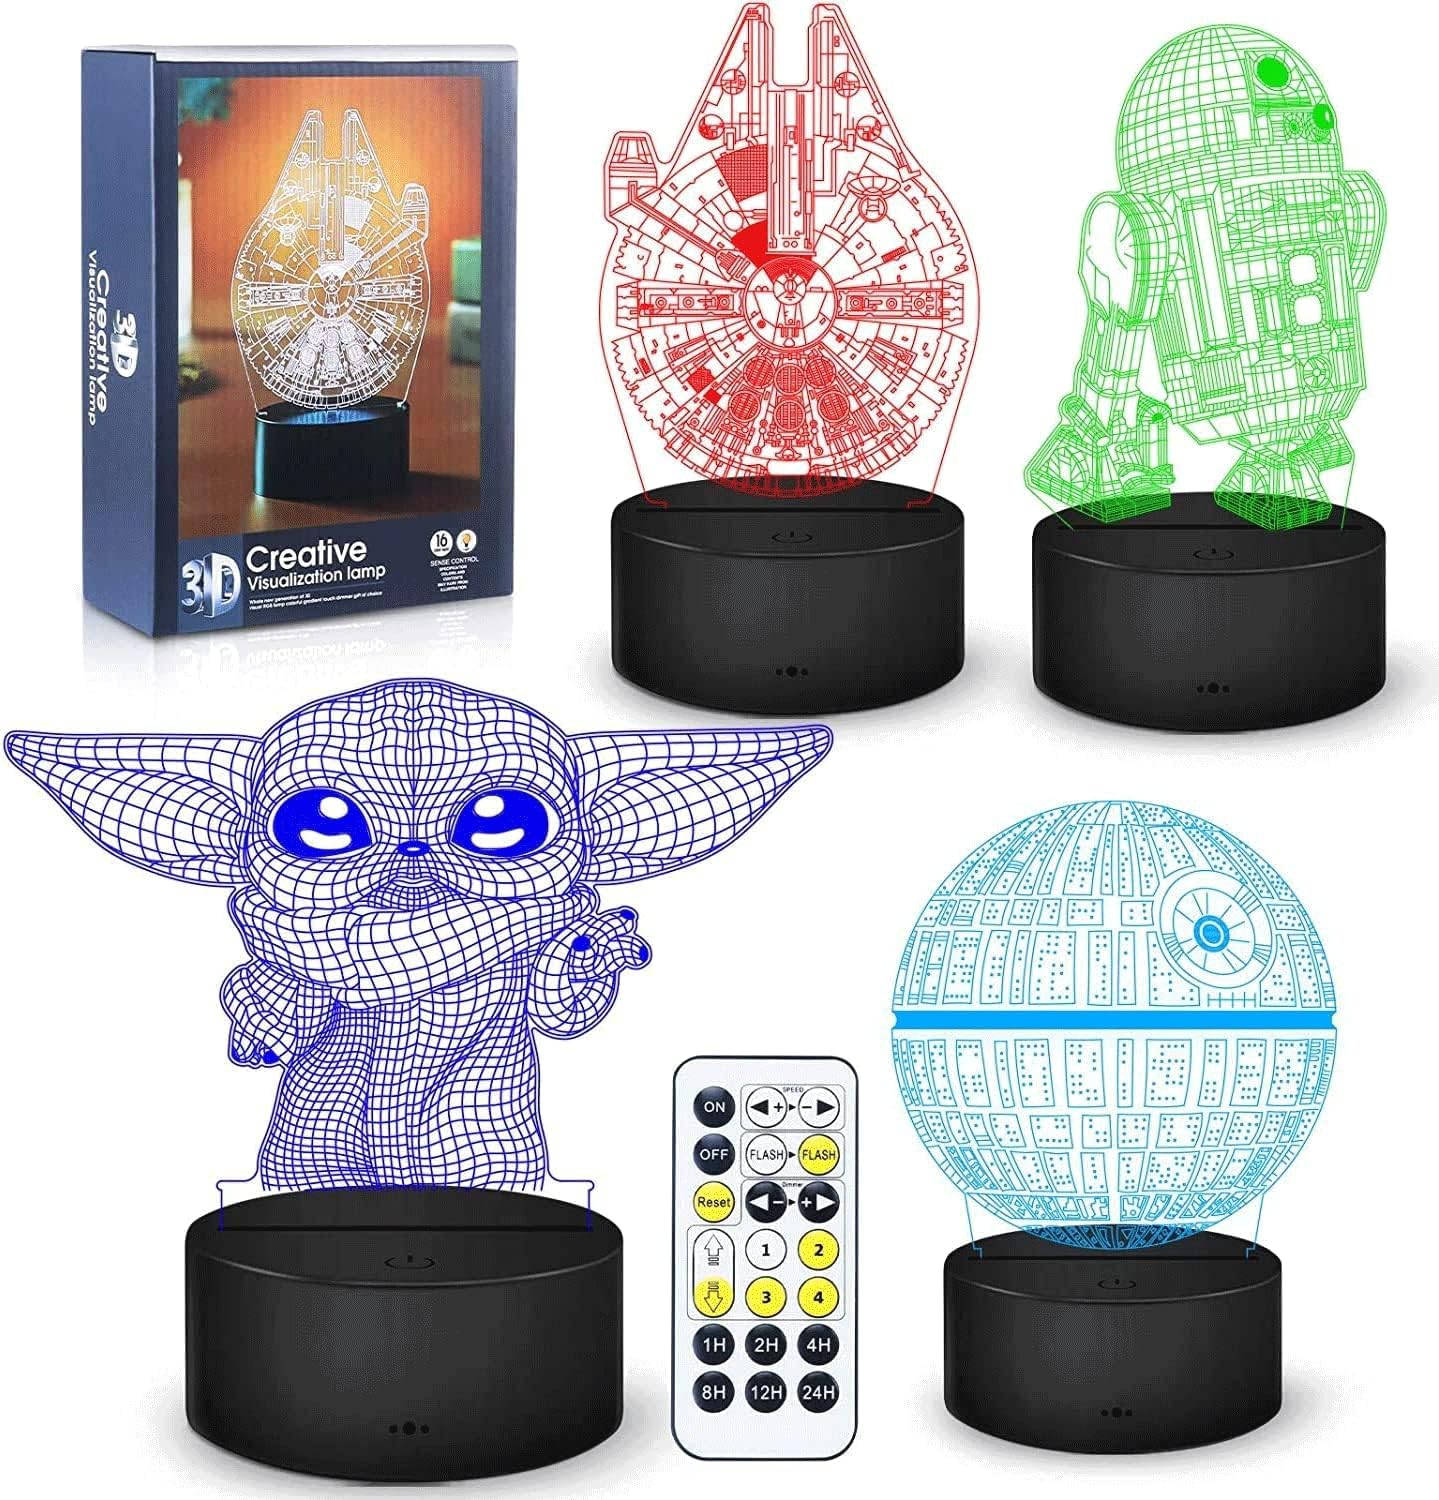 Nerdy Valentine's Day gift ideas for him: 3D Star Wars night light